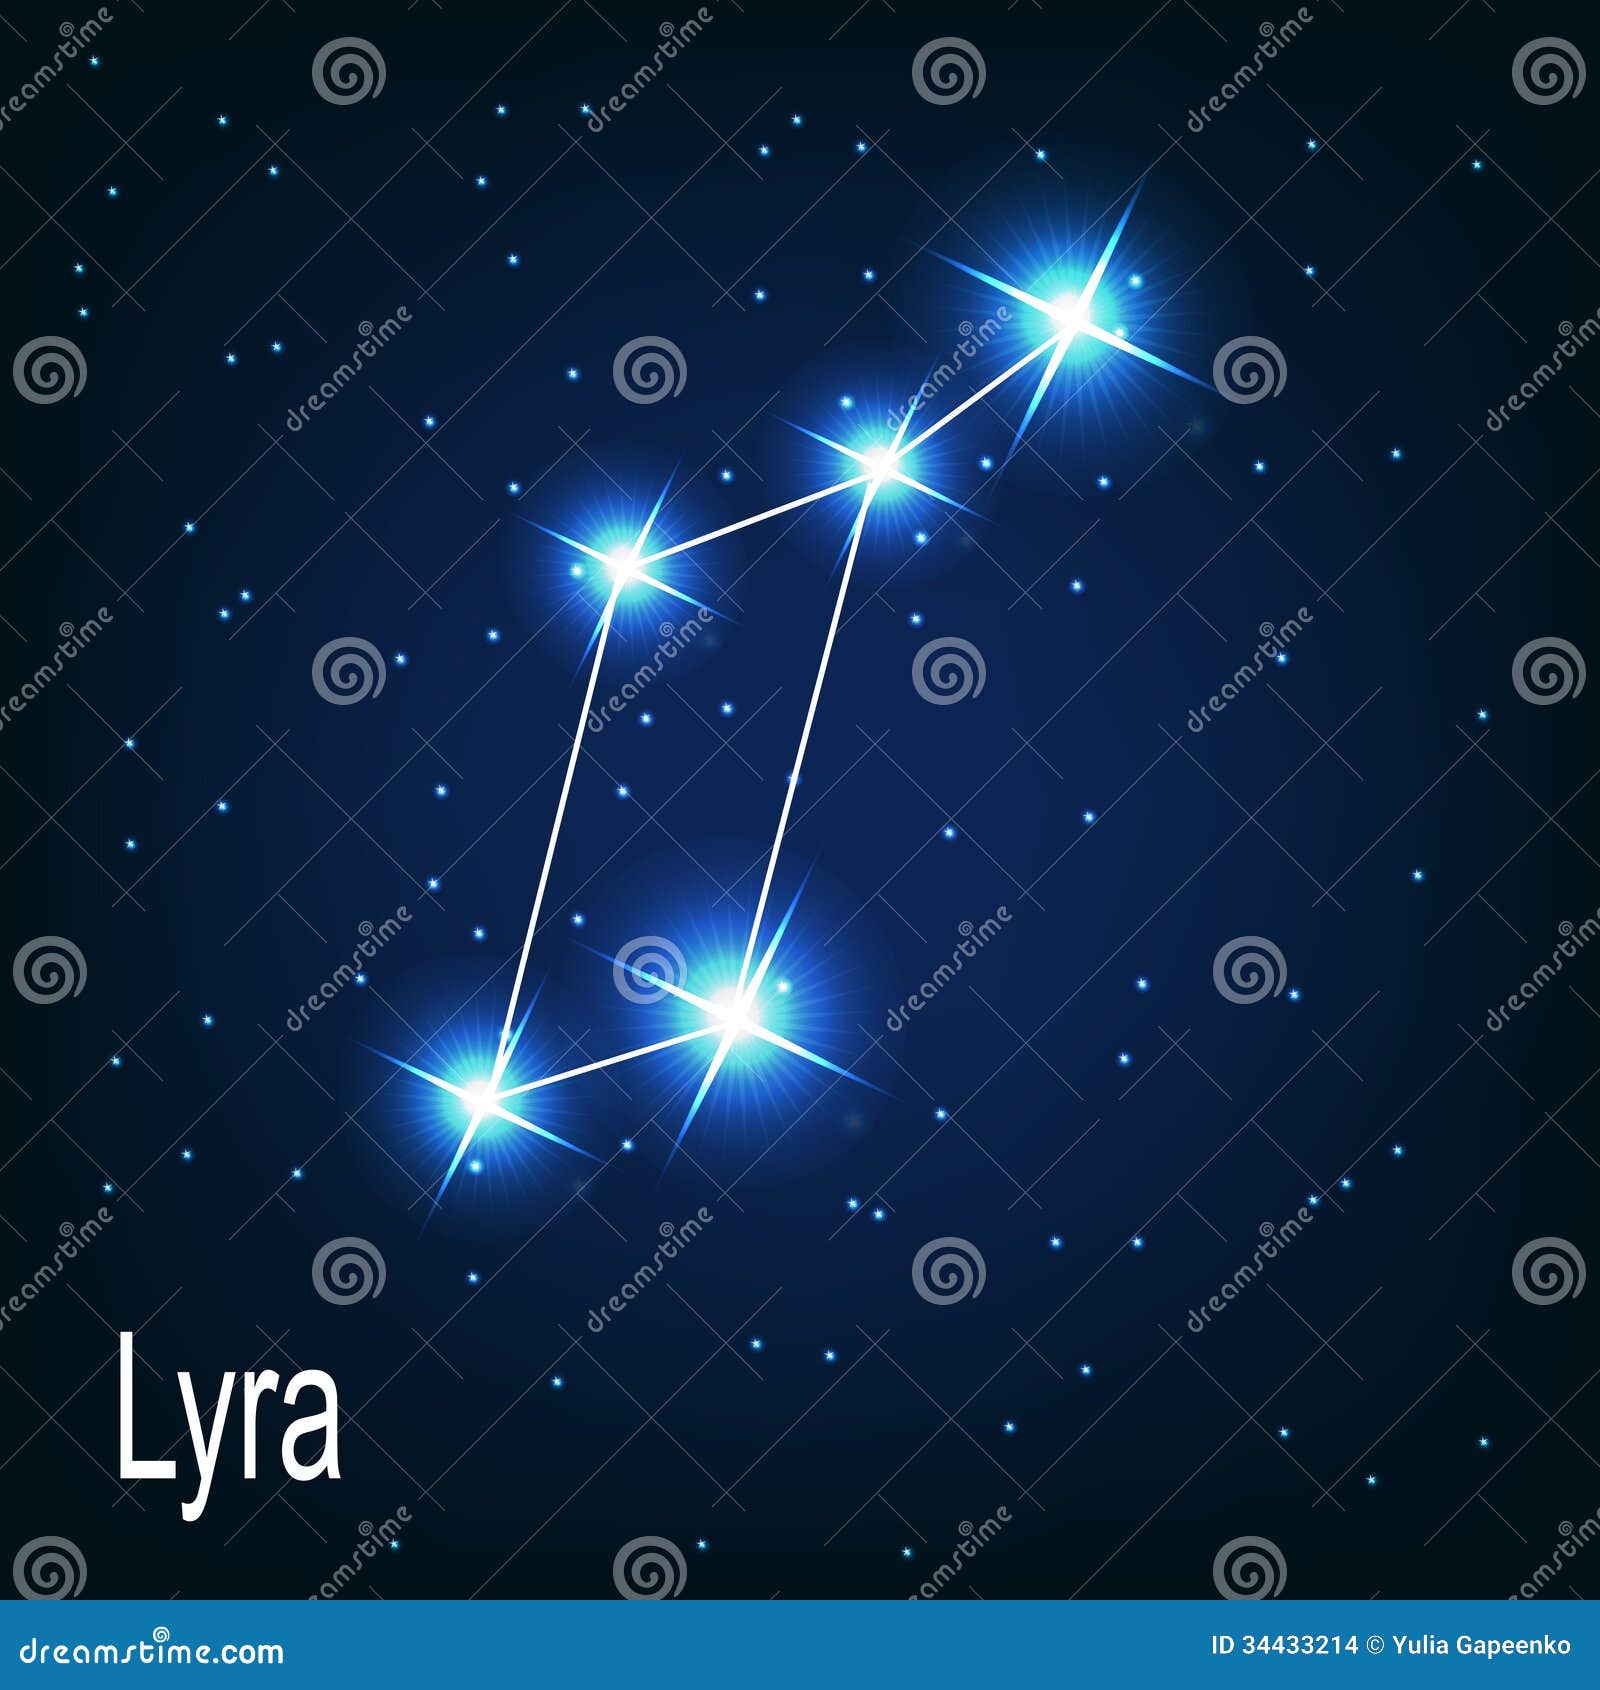 the constellation lyra star in the night sky.